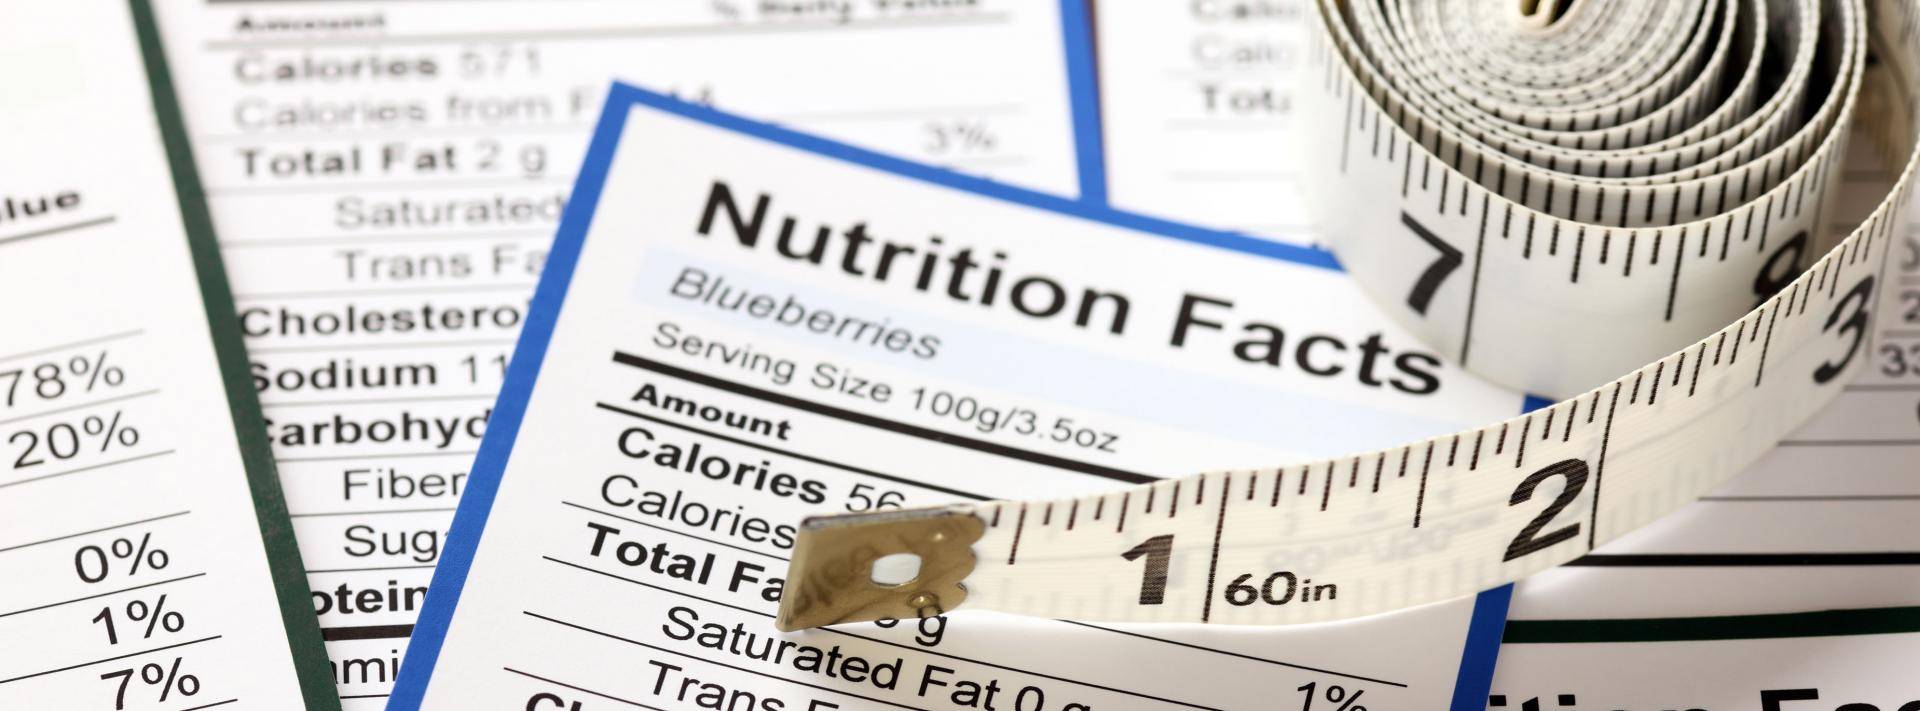 Food Nutrition Facts, Nutri Score, Food Labelling Legislation